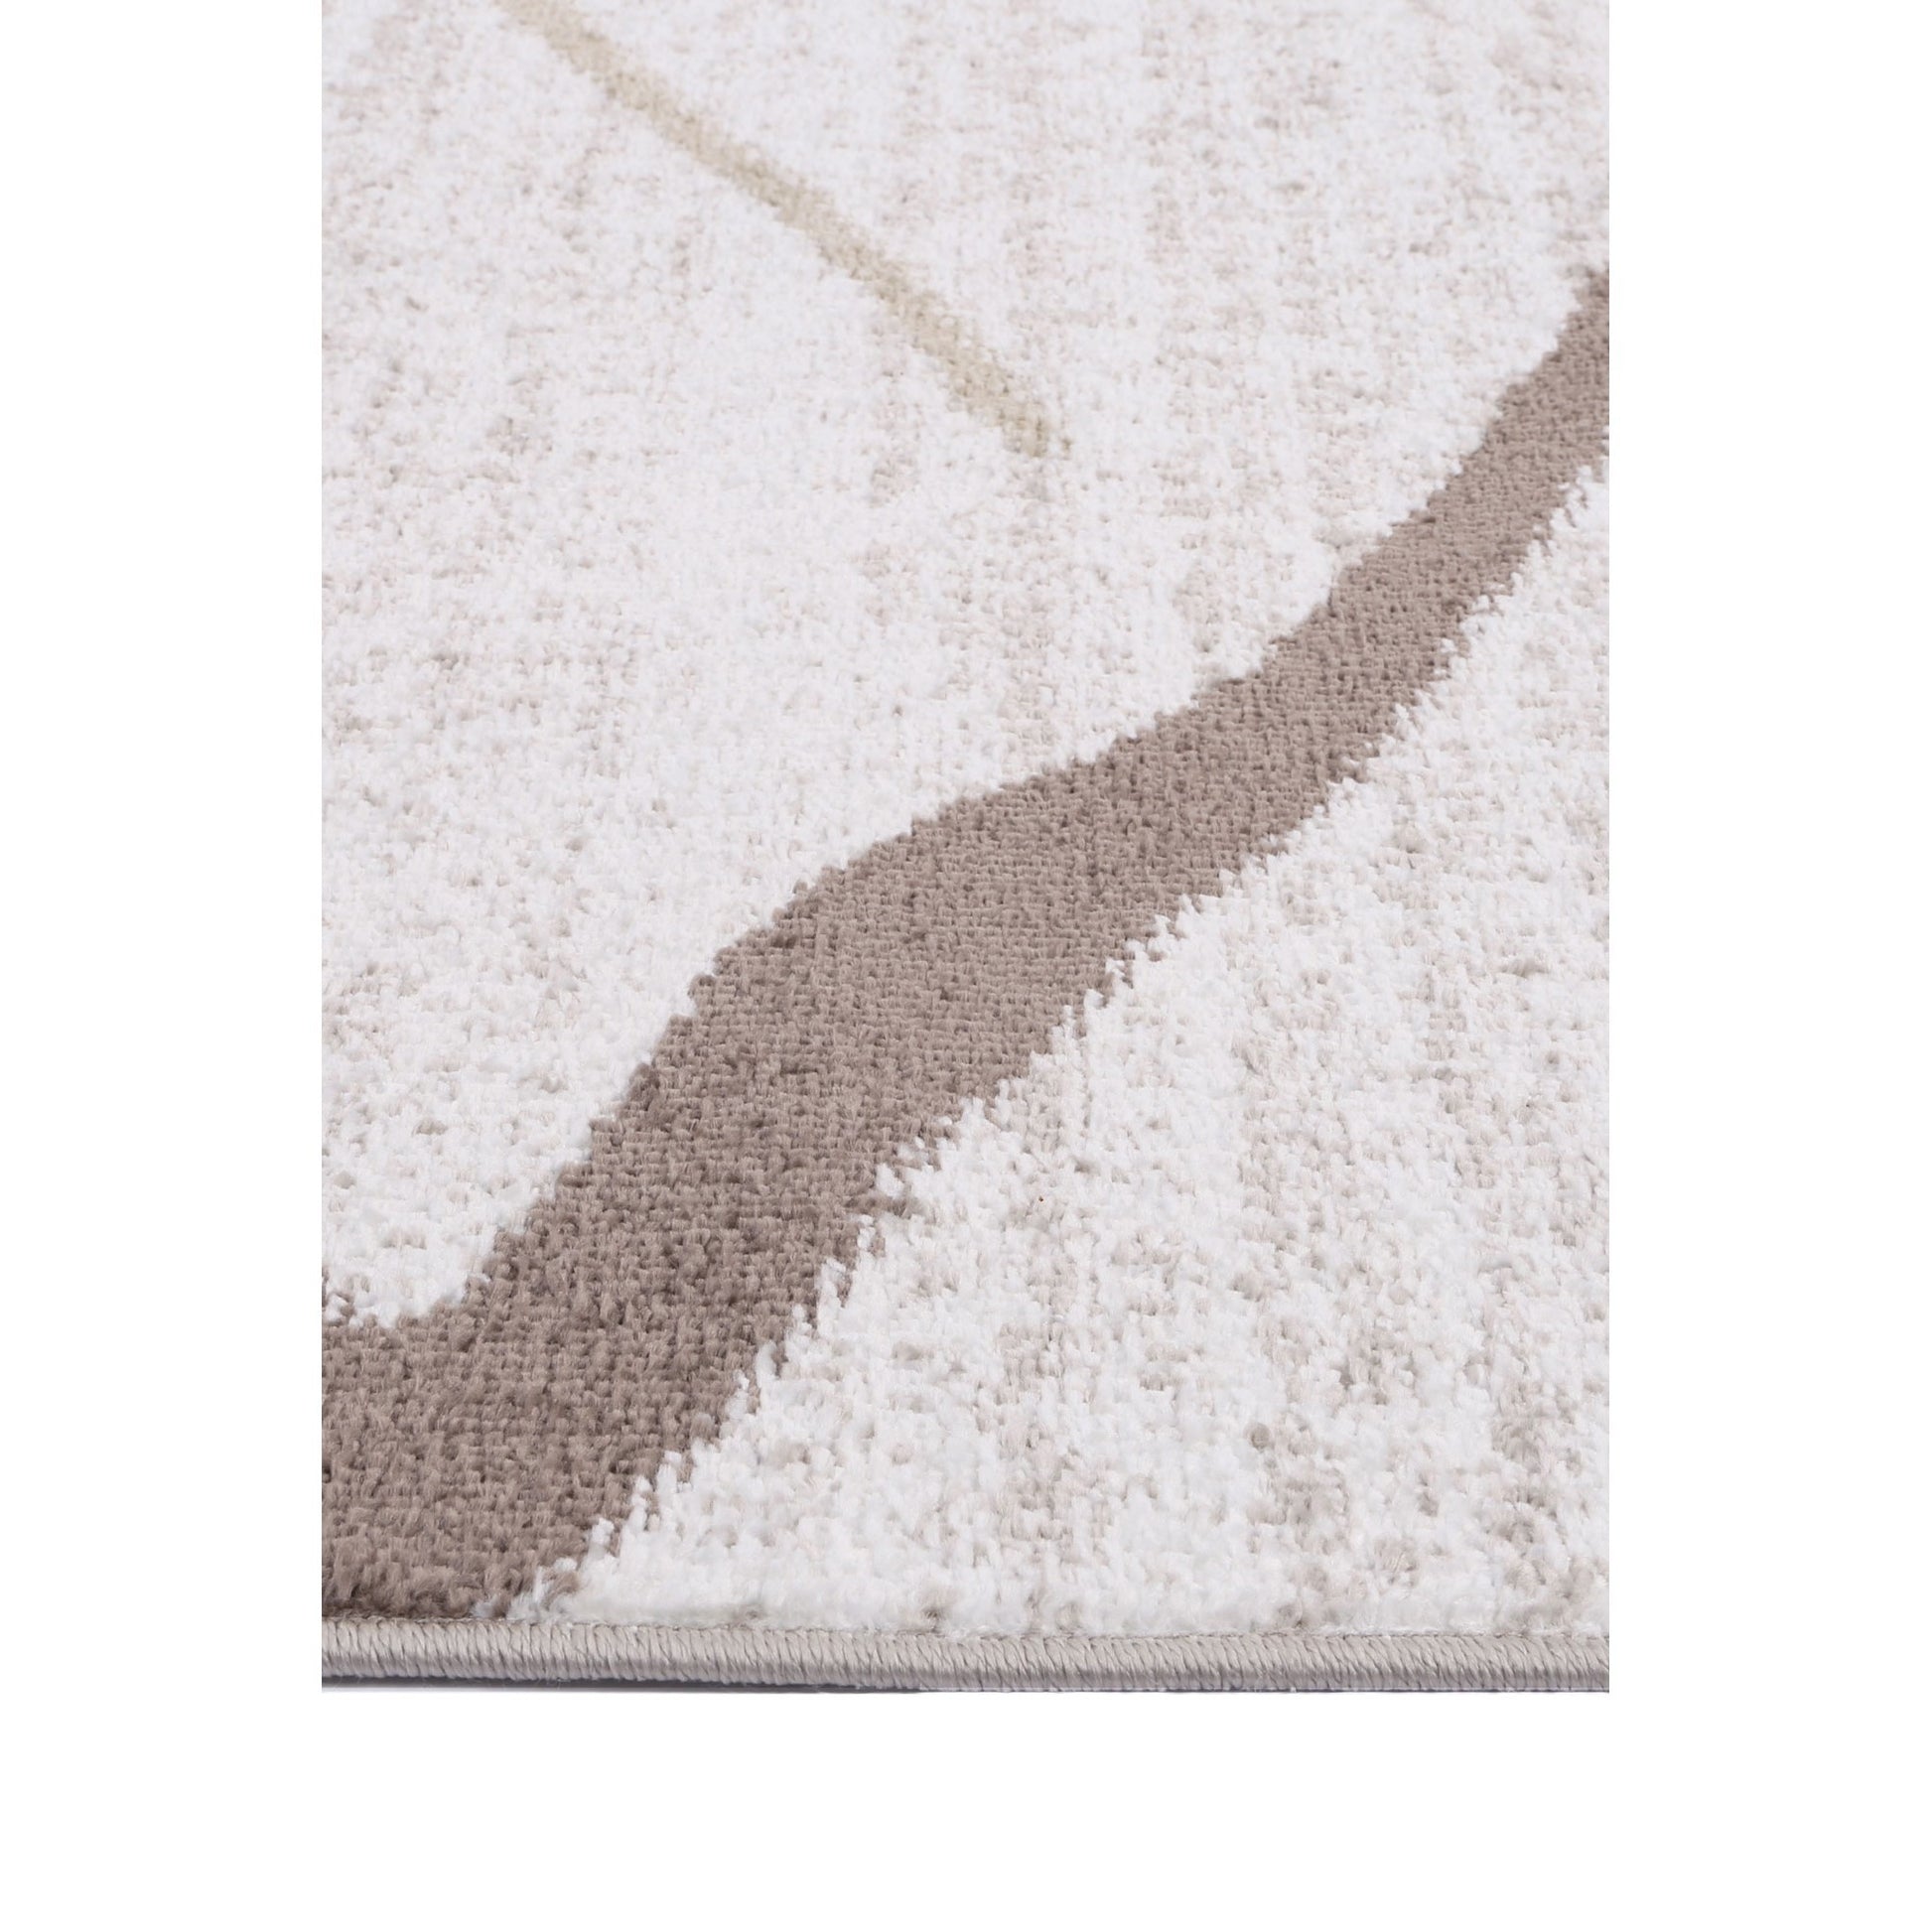 Kimberley Draft Line Modern Rug, 230x160cm, Latte / White